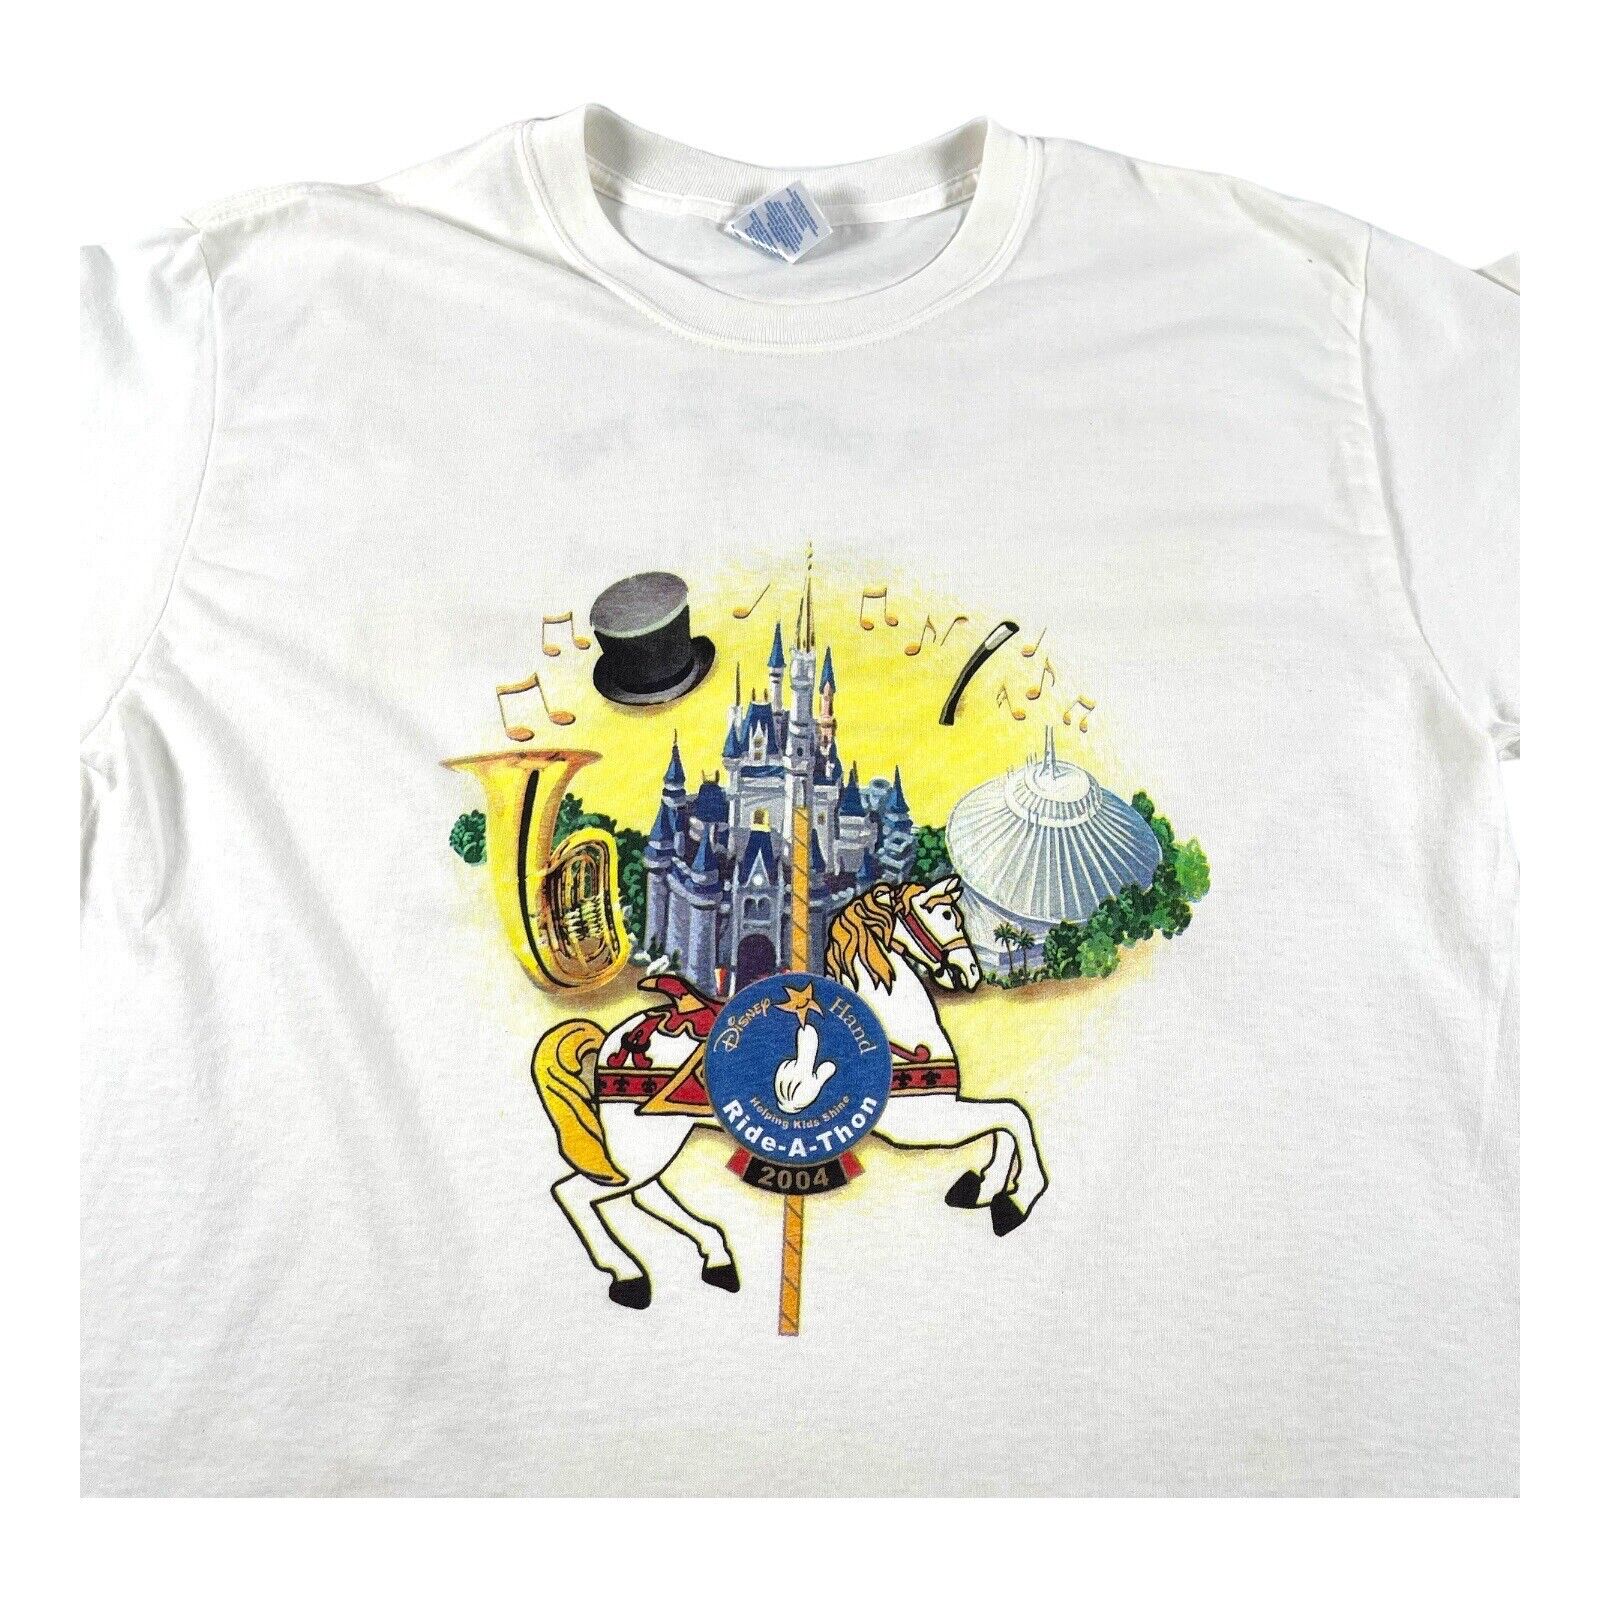 Disney Hand Ride-a-Thon Shirt 2004 Size Large White Magic Kingdom Carrousel VTG